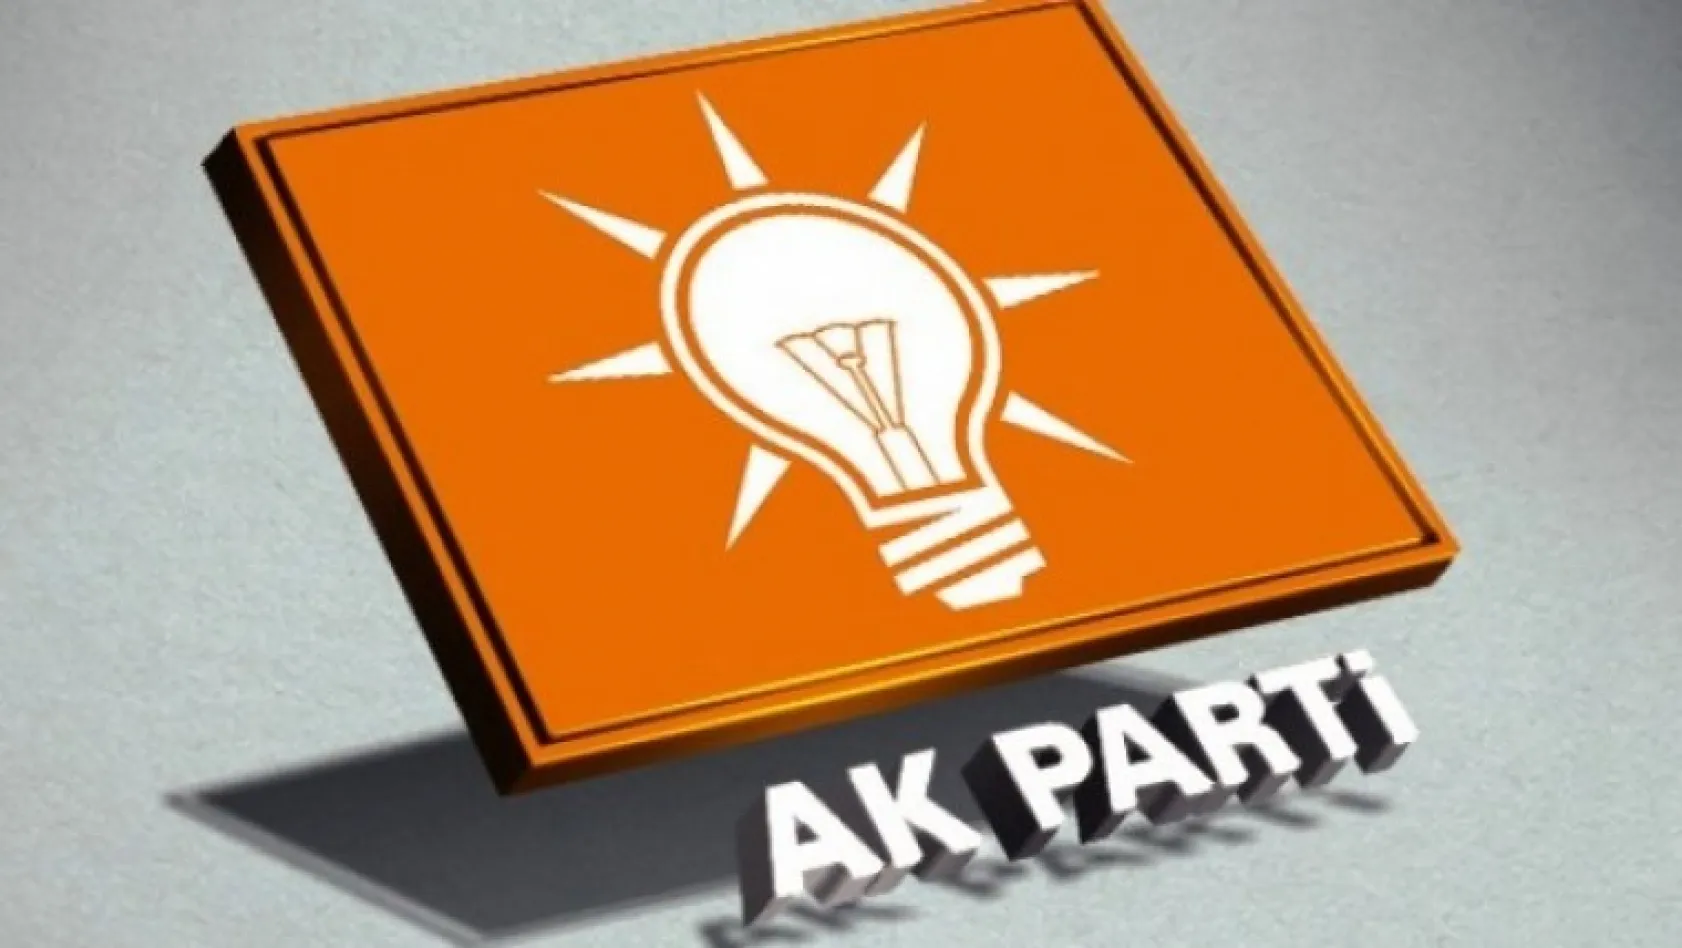 AK Parti'de kongre tarihi belli oldu!